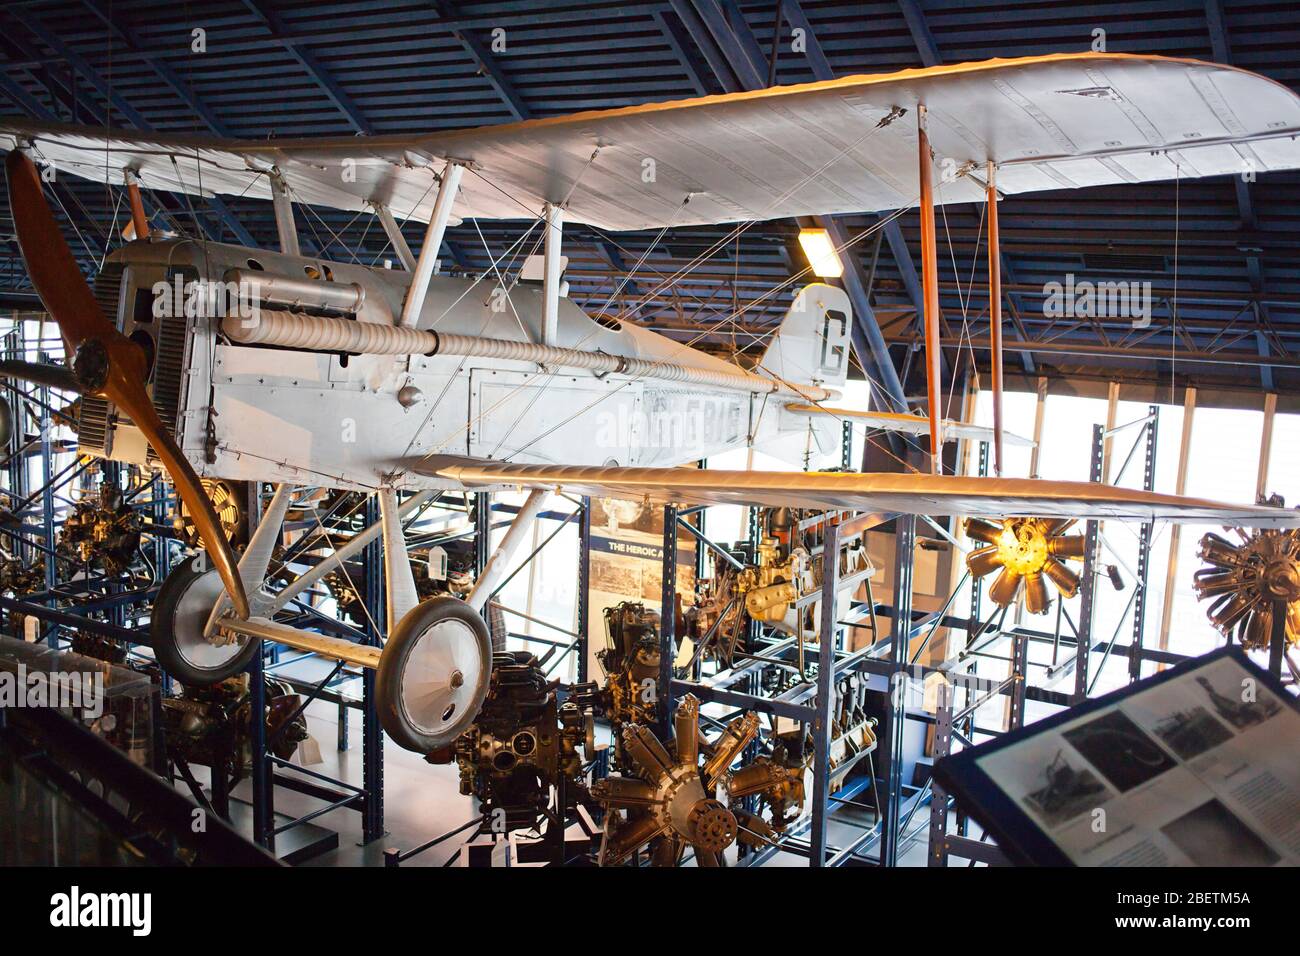 Science Museum, Londra - mostra di aerei Foto Stock